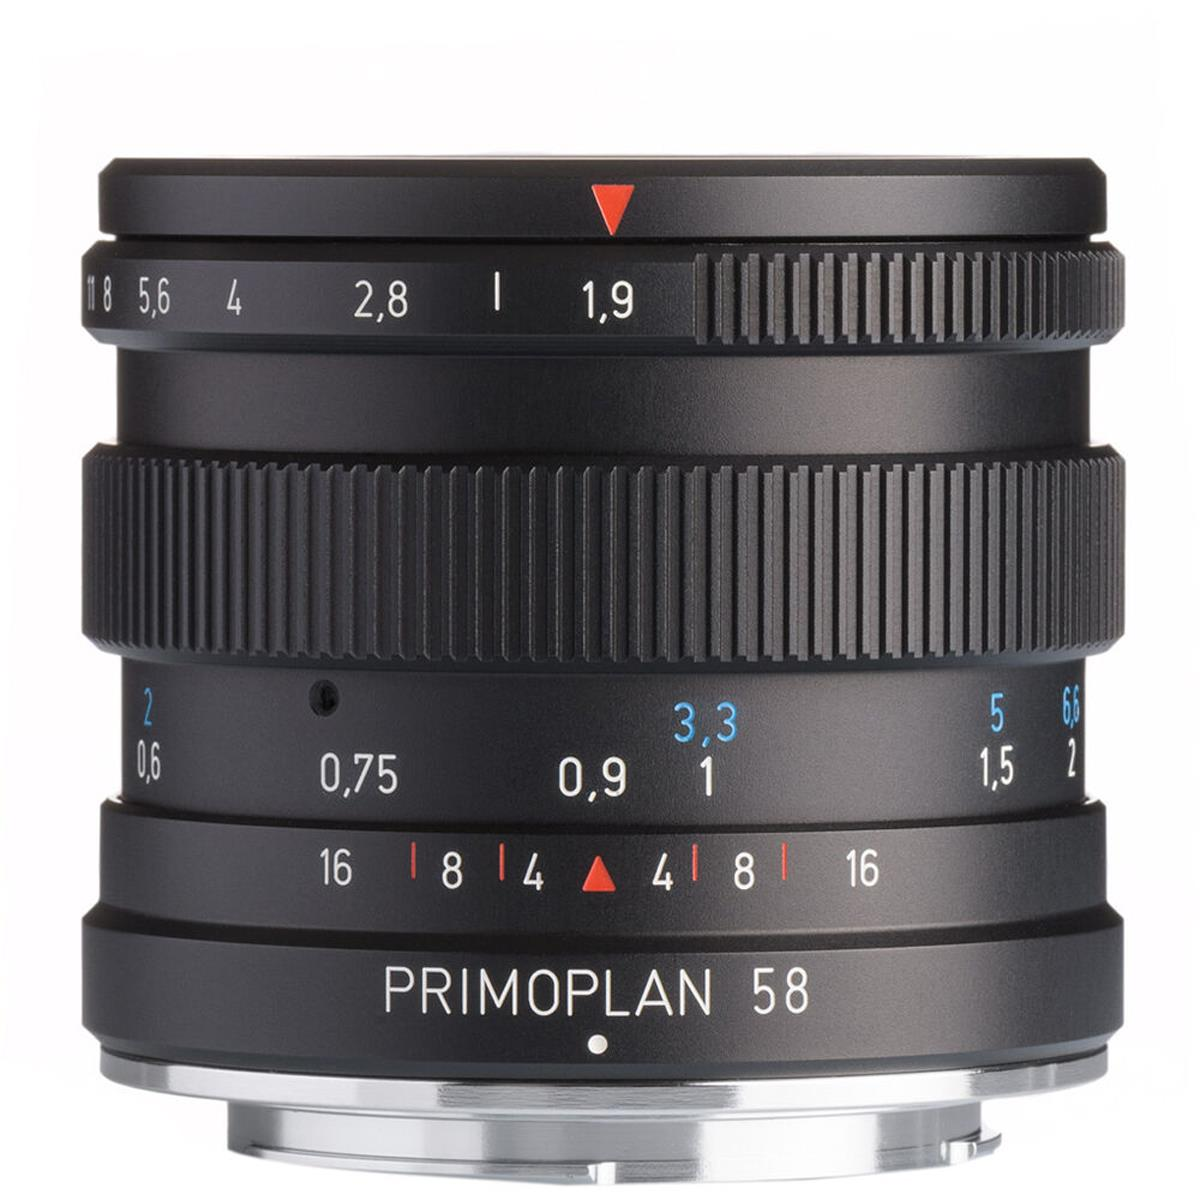 Meyer-Optik Gorlitz Primoplan 58 f1.9 II Lens for Canon EF